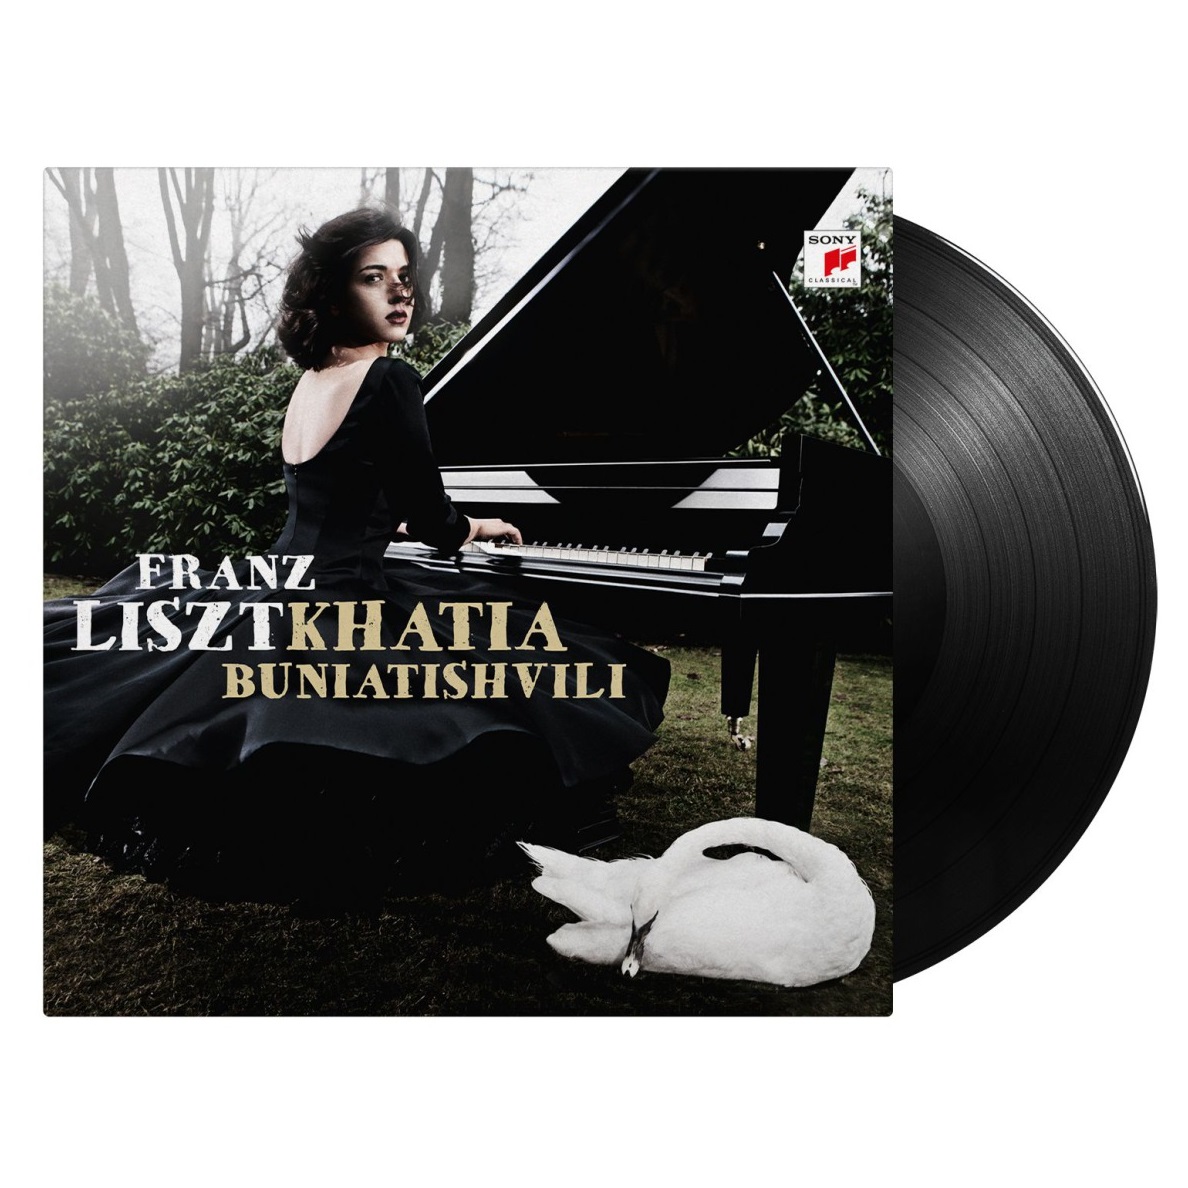 Khatia Buniatishvili 리스트: 사랑의 꿈, 피아노 소나타, 메피스토 왈츠 - 카티아 부니아티쉬빌리 (Franz Liszt: Liebestraum, Sonata in B minor, Mephisto Waltz) [2LP]